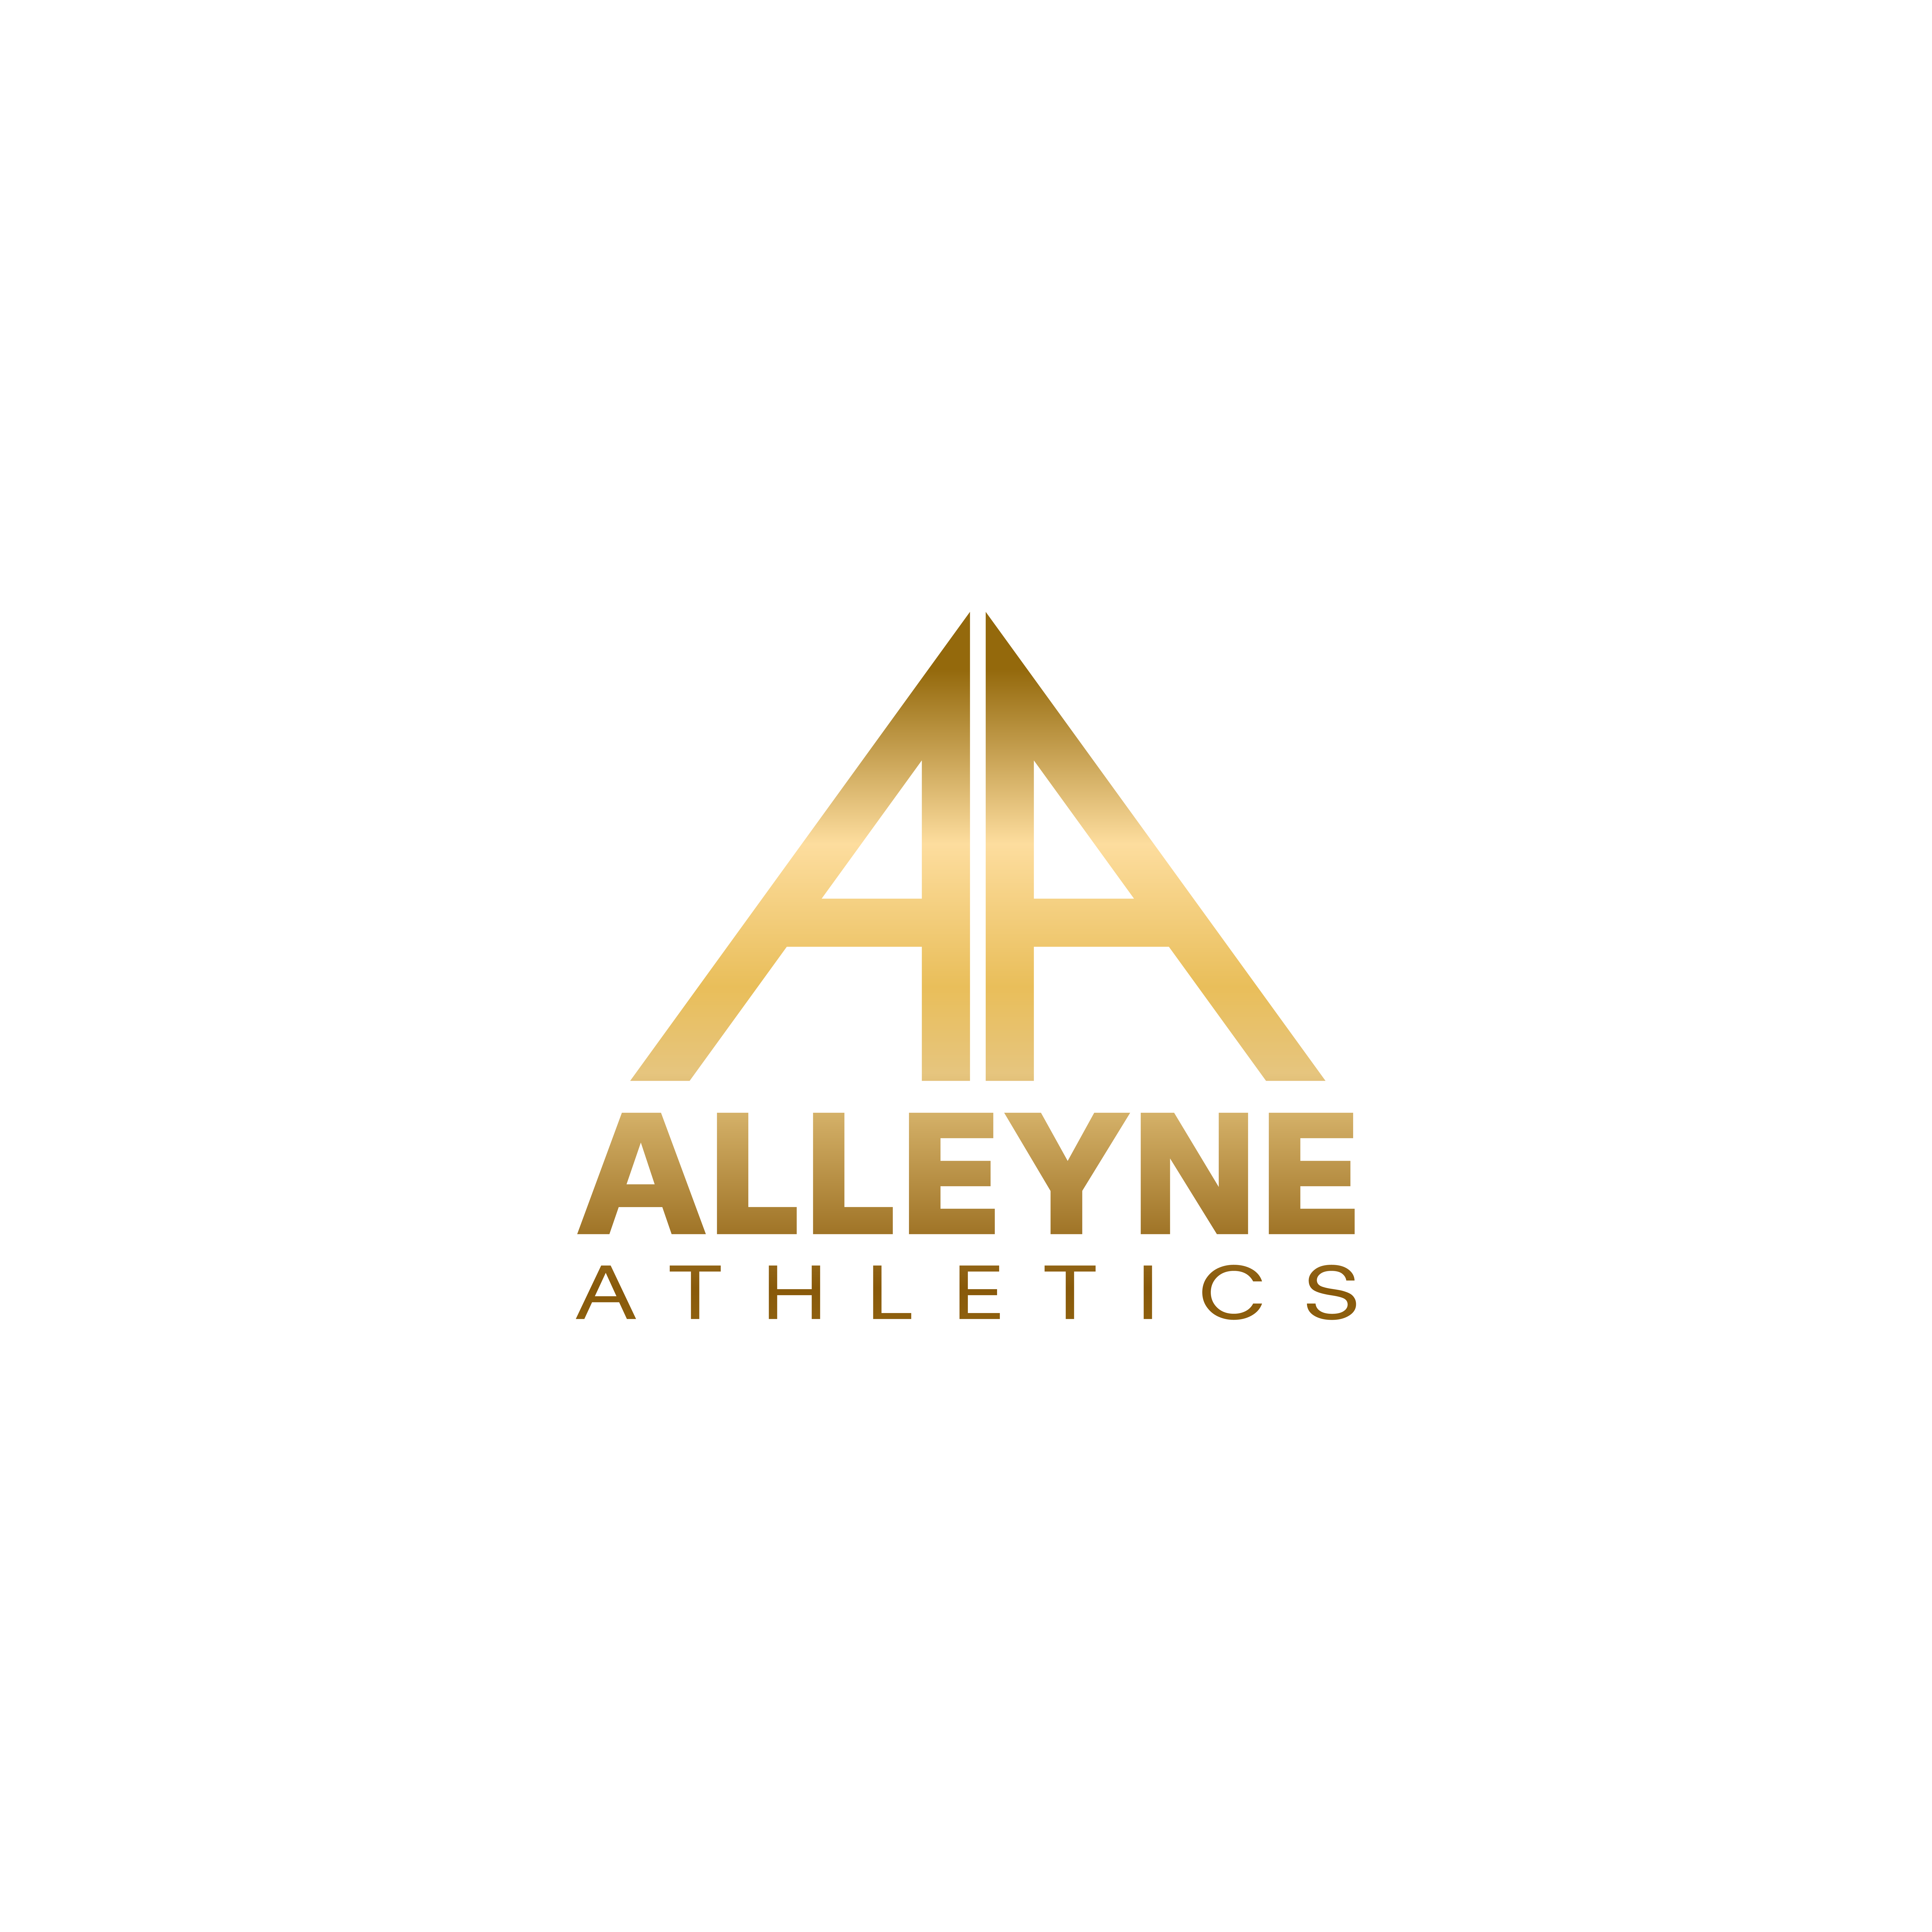 Alleyne Athletics Scholarship Fund